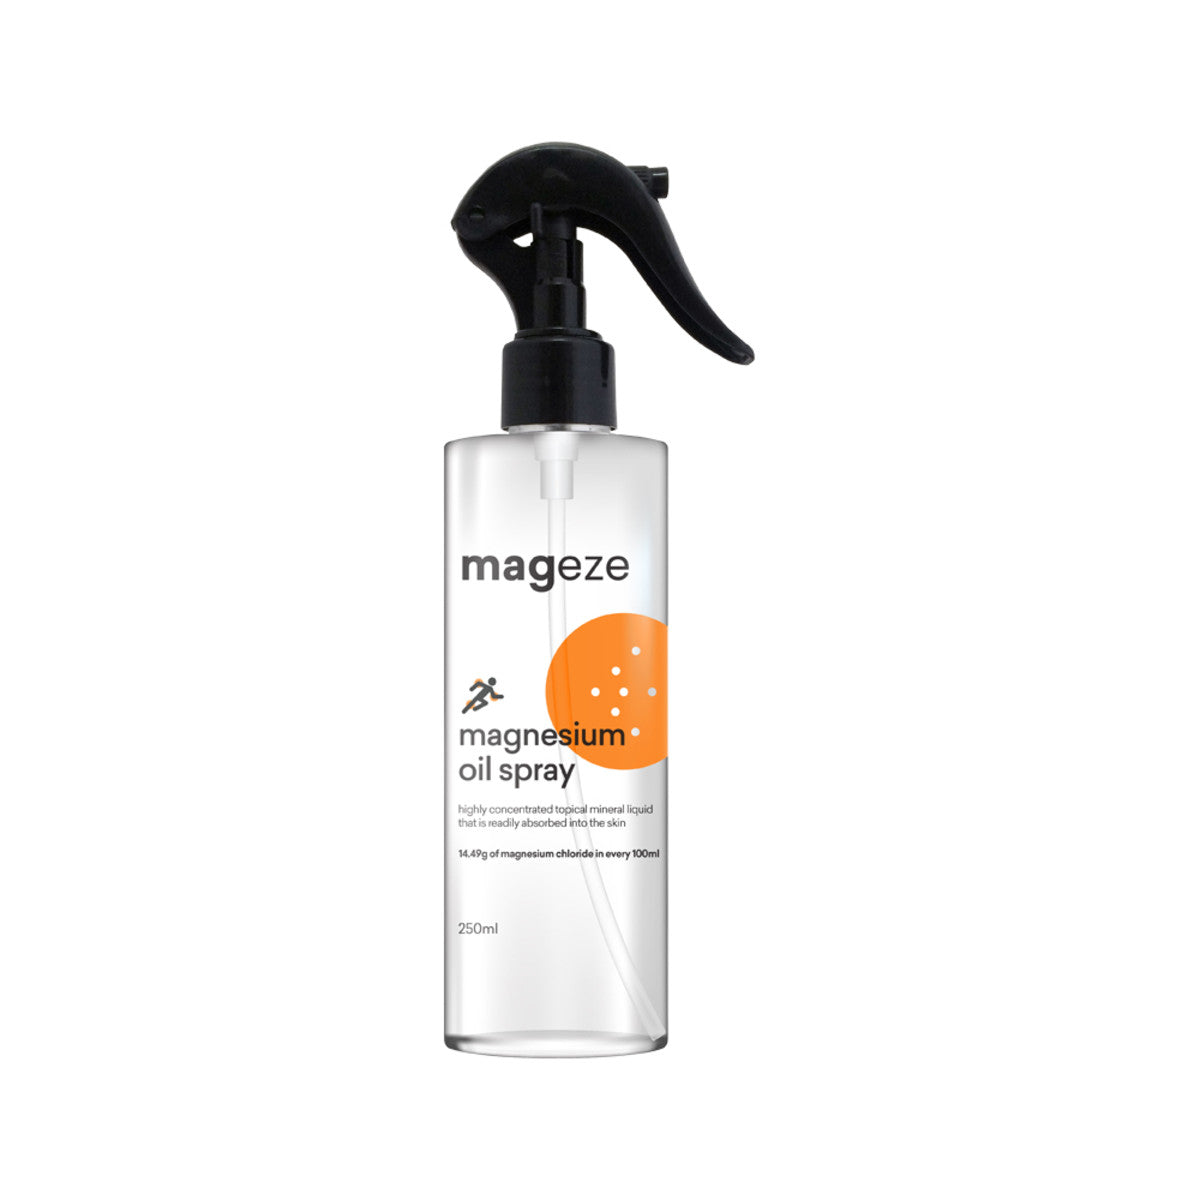 Mageze - Magnesium Oil Spray 250ml